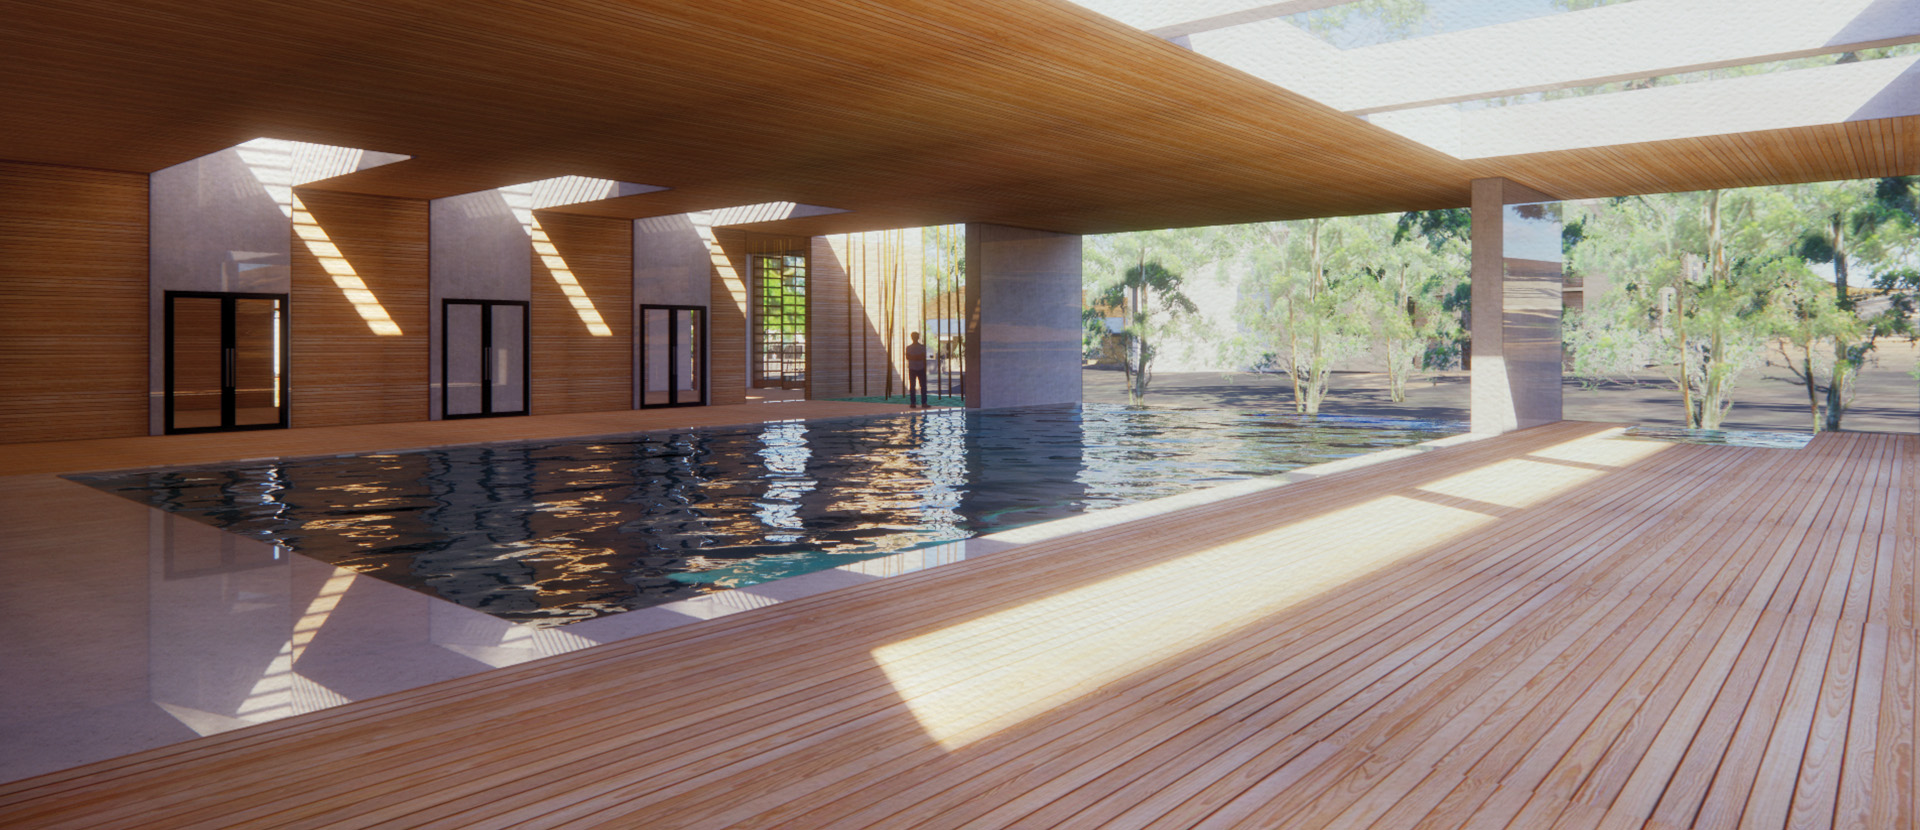 rendering of pool at Enso Verde in simi valley, california